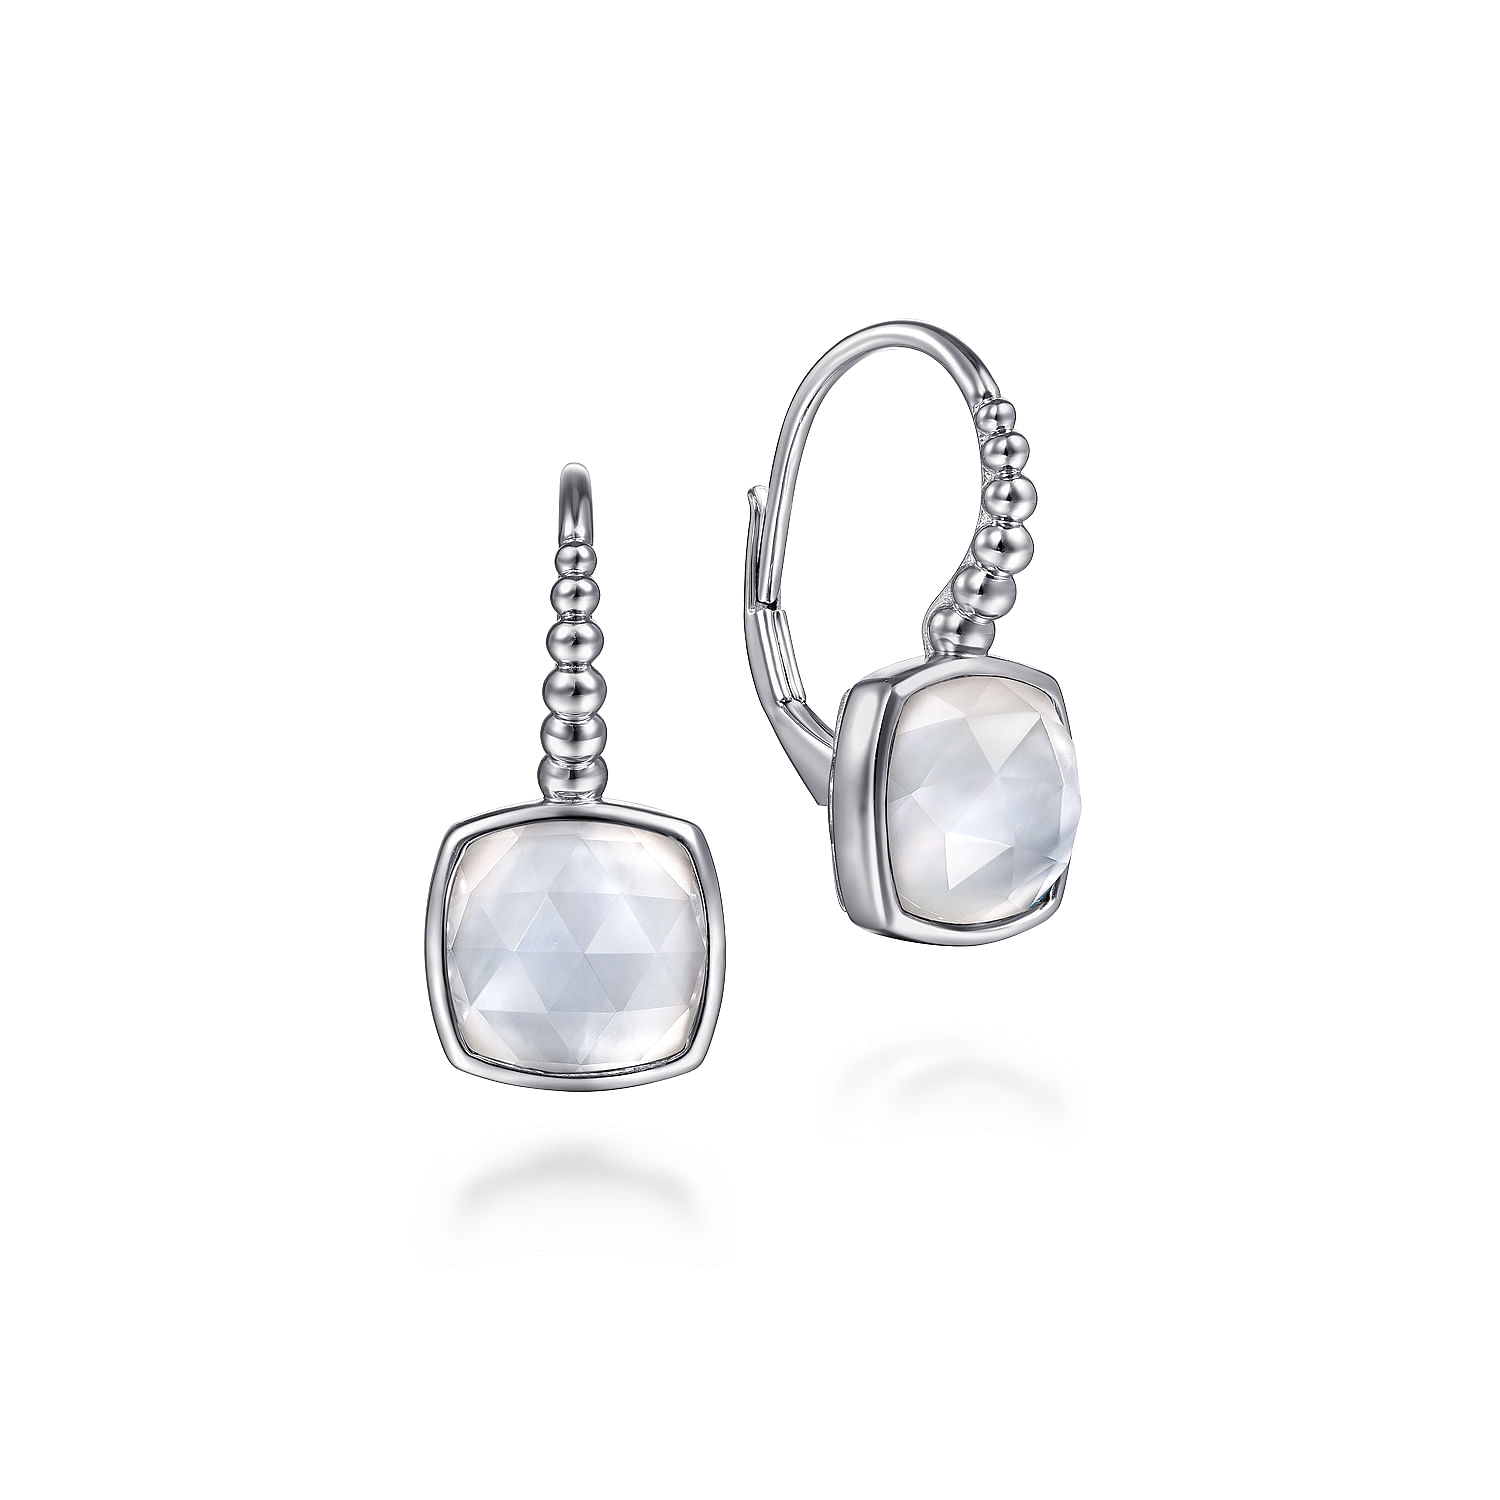 925 Sterling Silver Bujukan Rock Crystal/White MOP Leverback Earrings